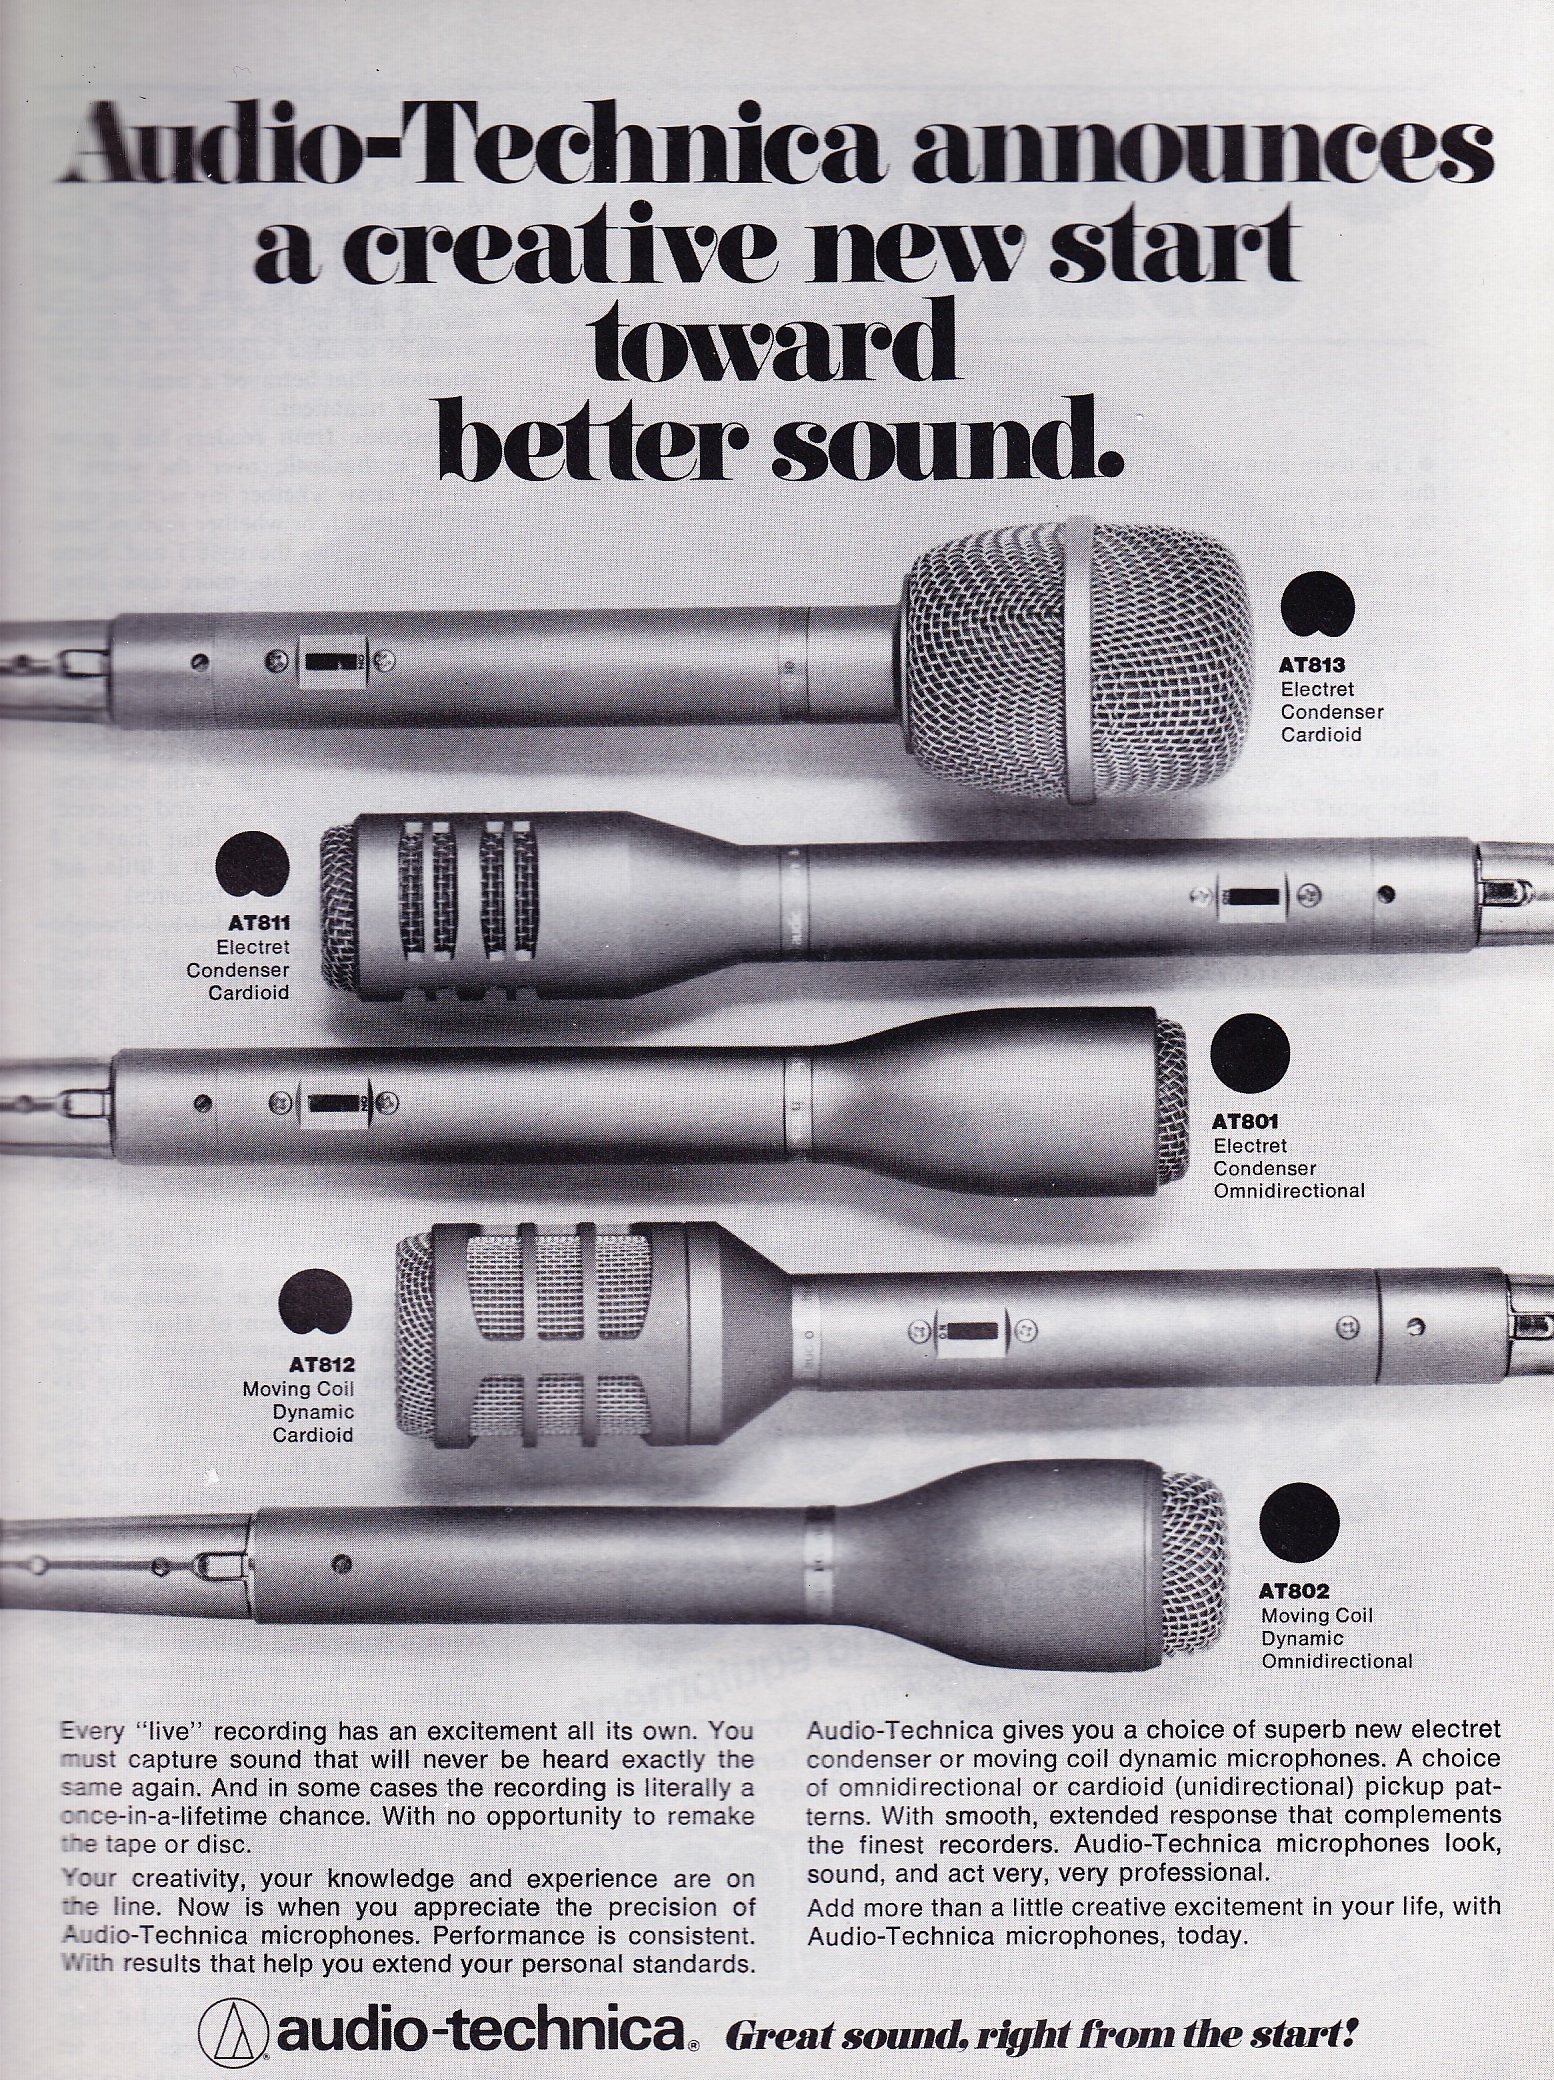 UPDATED: The Audio Technica 813 Condensor Microphone c. 1977 